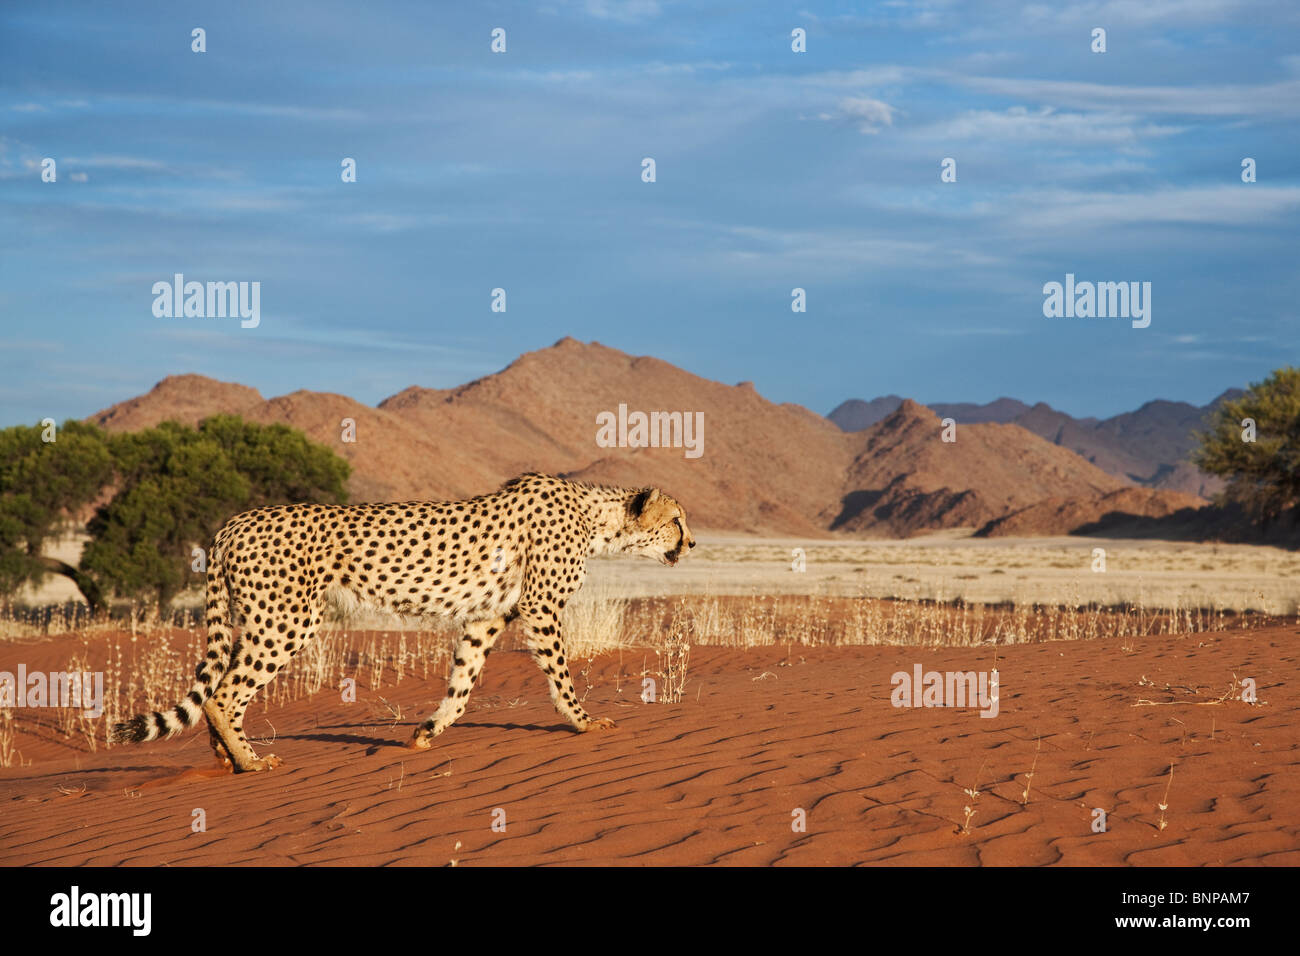 Cheetah (Acinonyx jubatus) with desert landscape in back ground. Namibia. Stock Photo